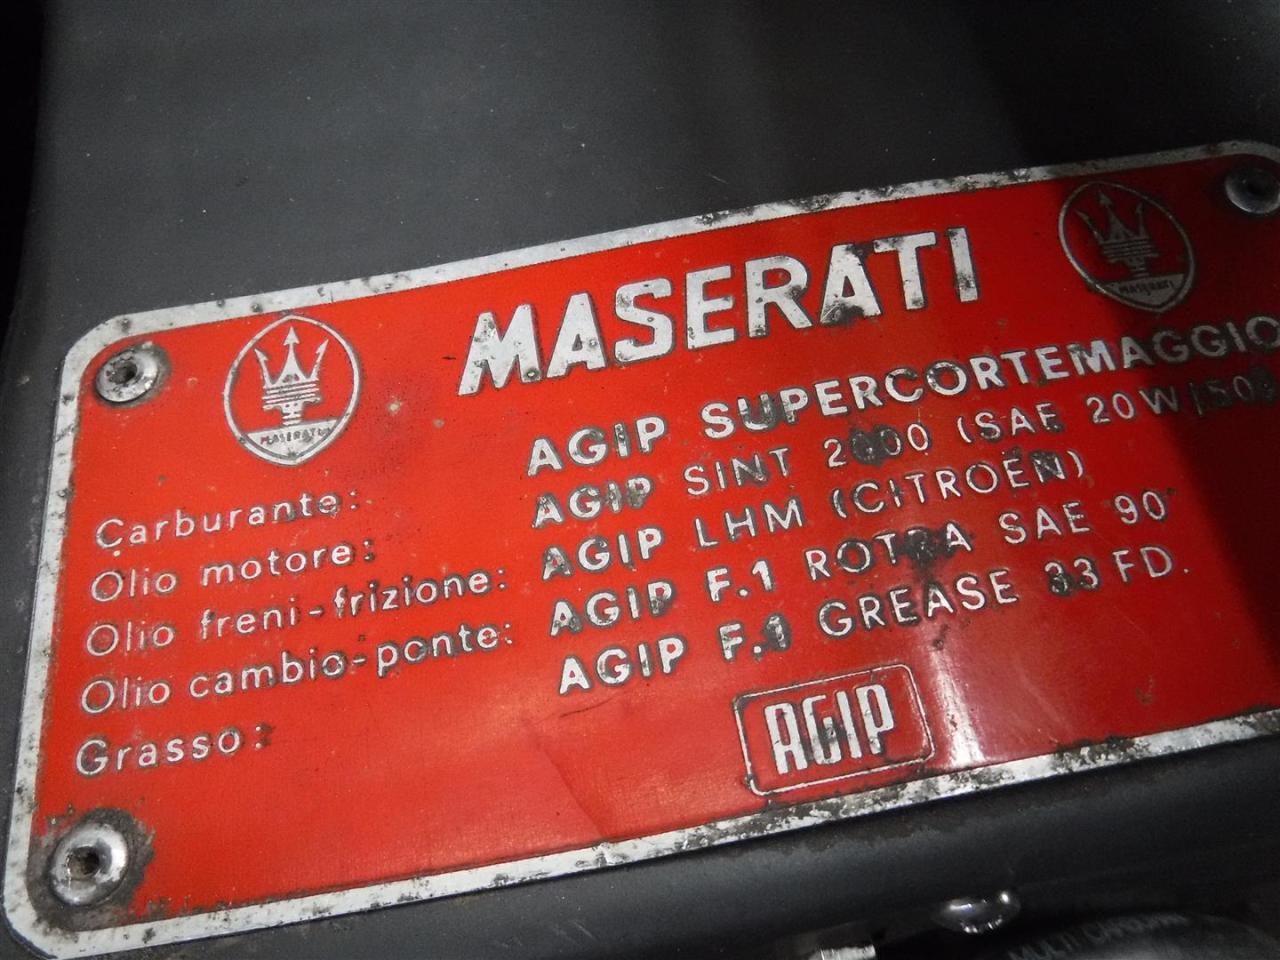 1973 Maserati Merak primer